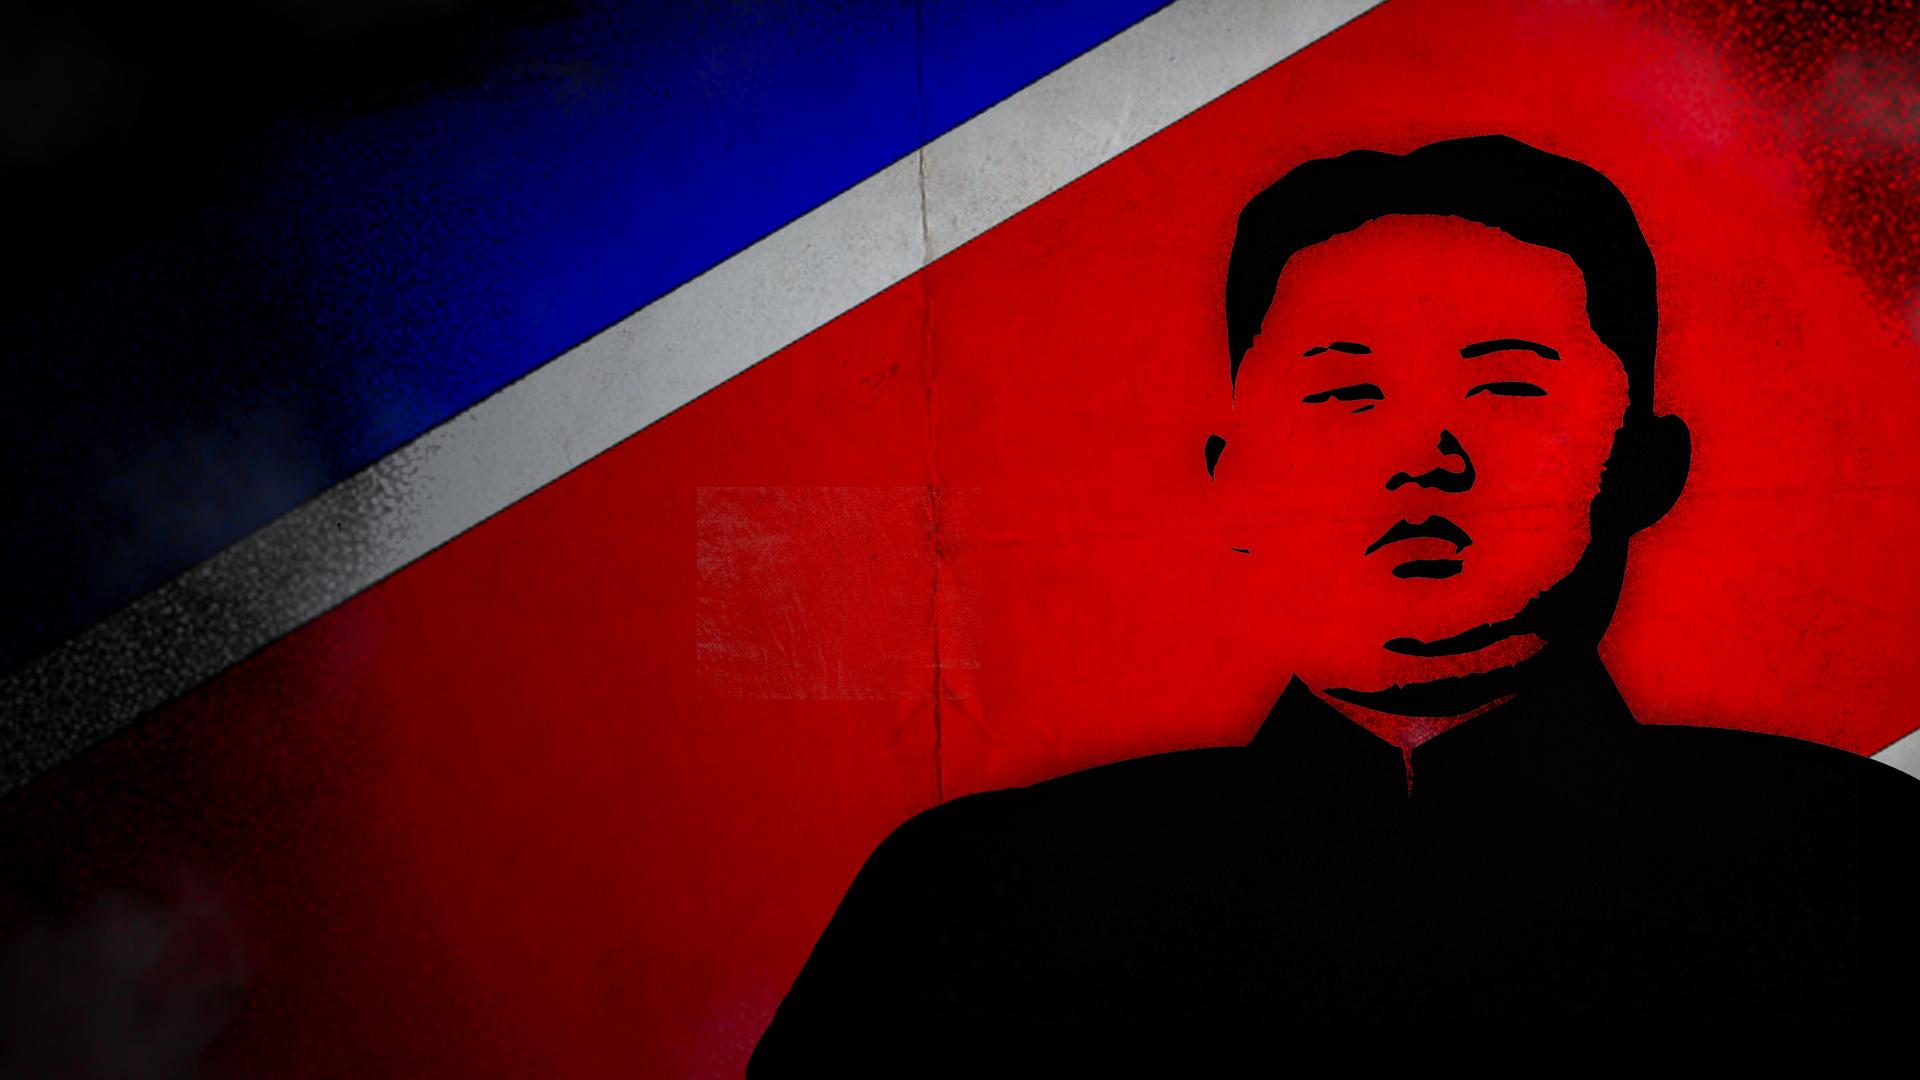 Kim Jong Un: The Unauthorized Biography - Trailer